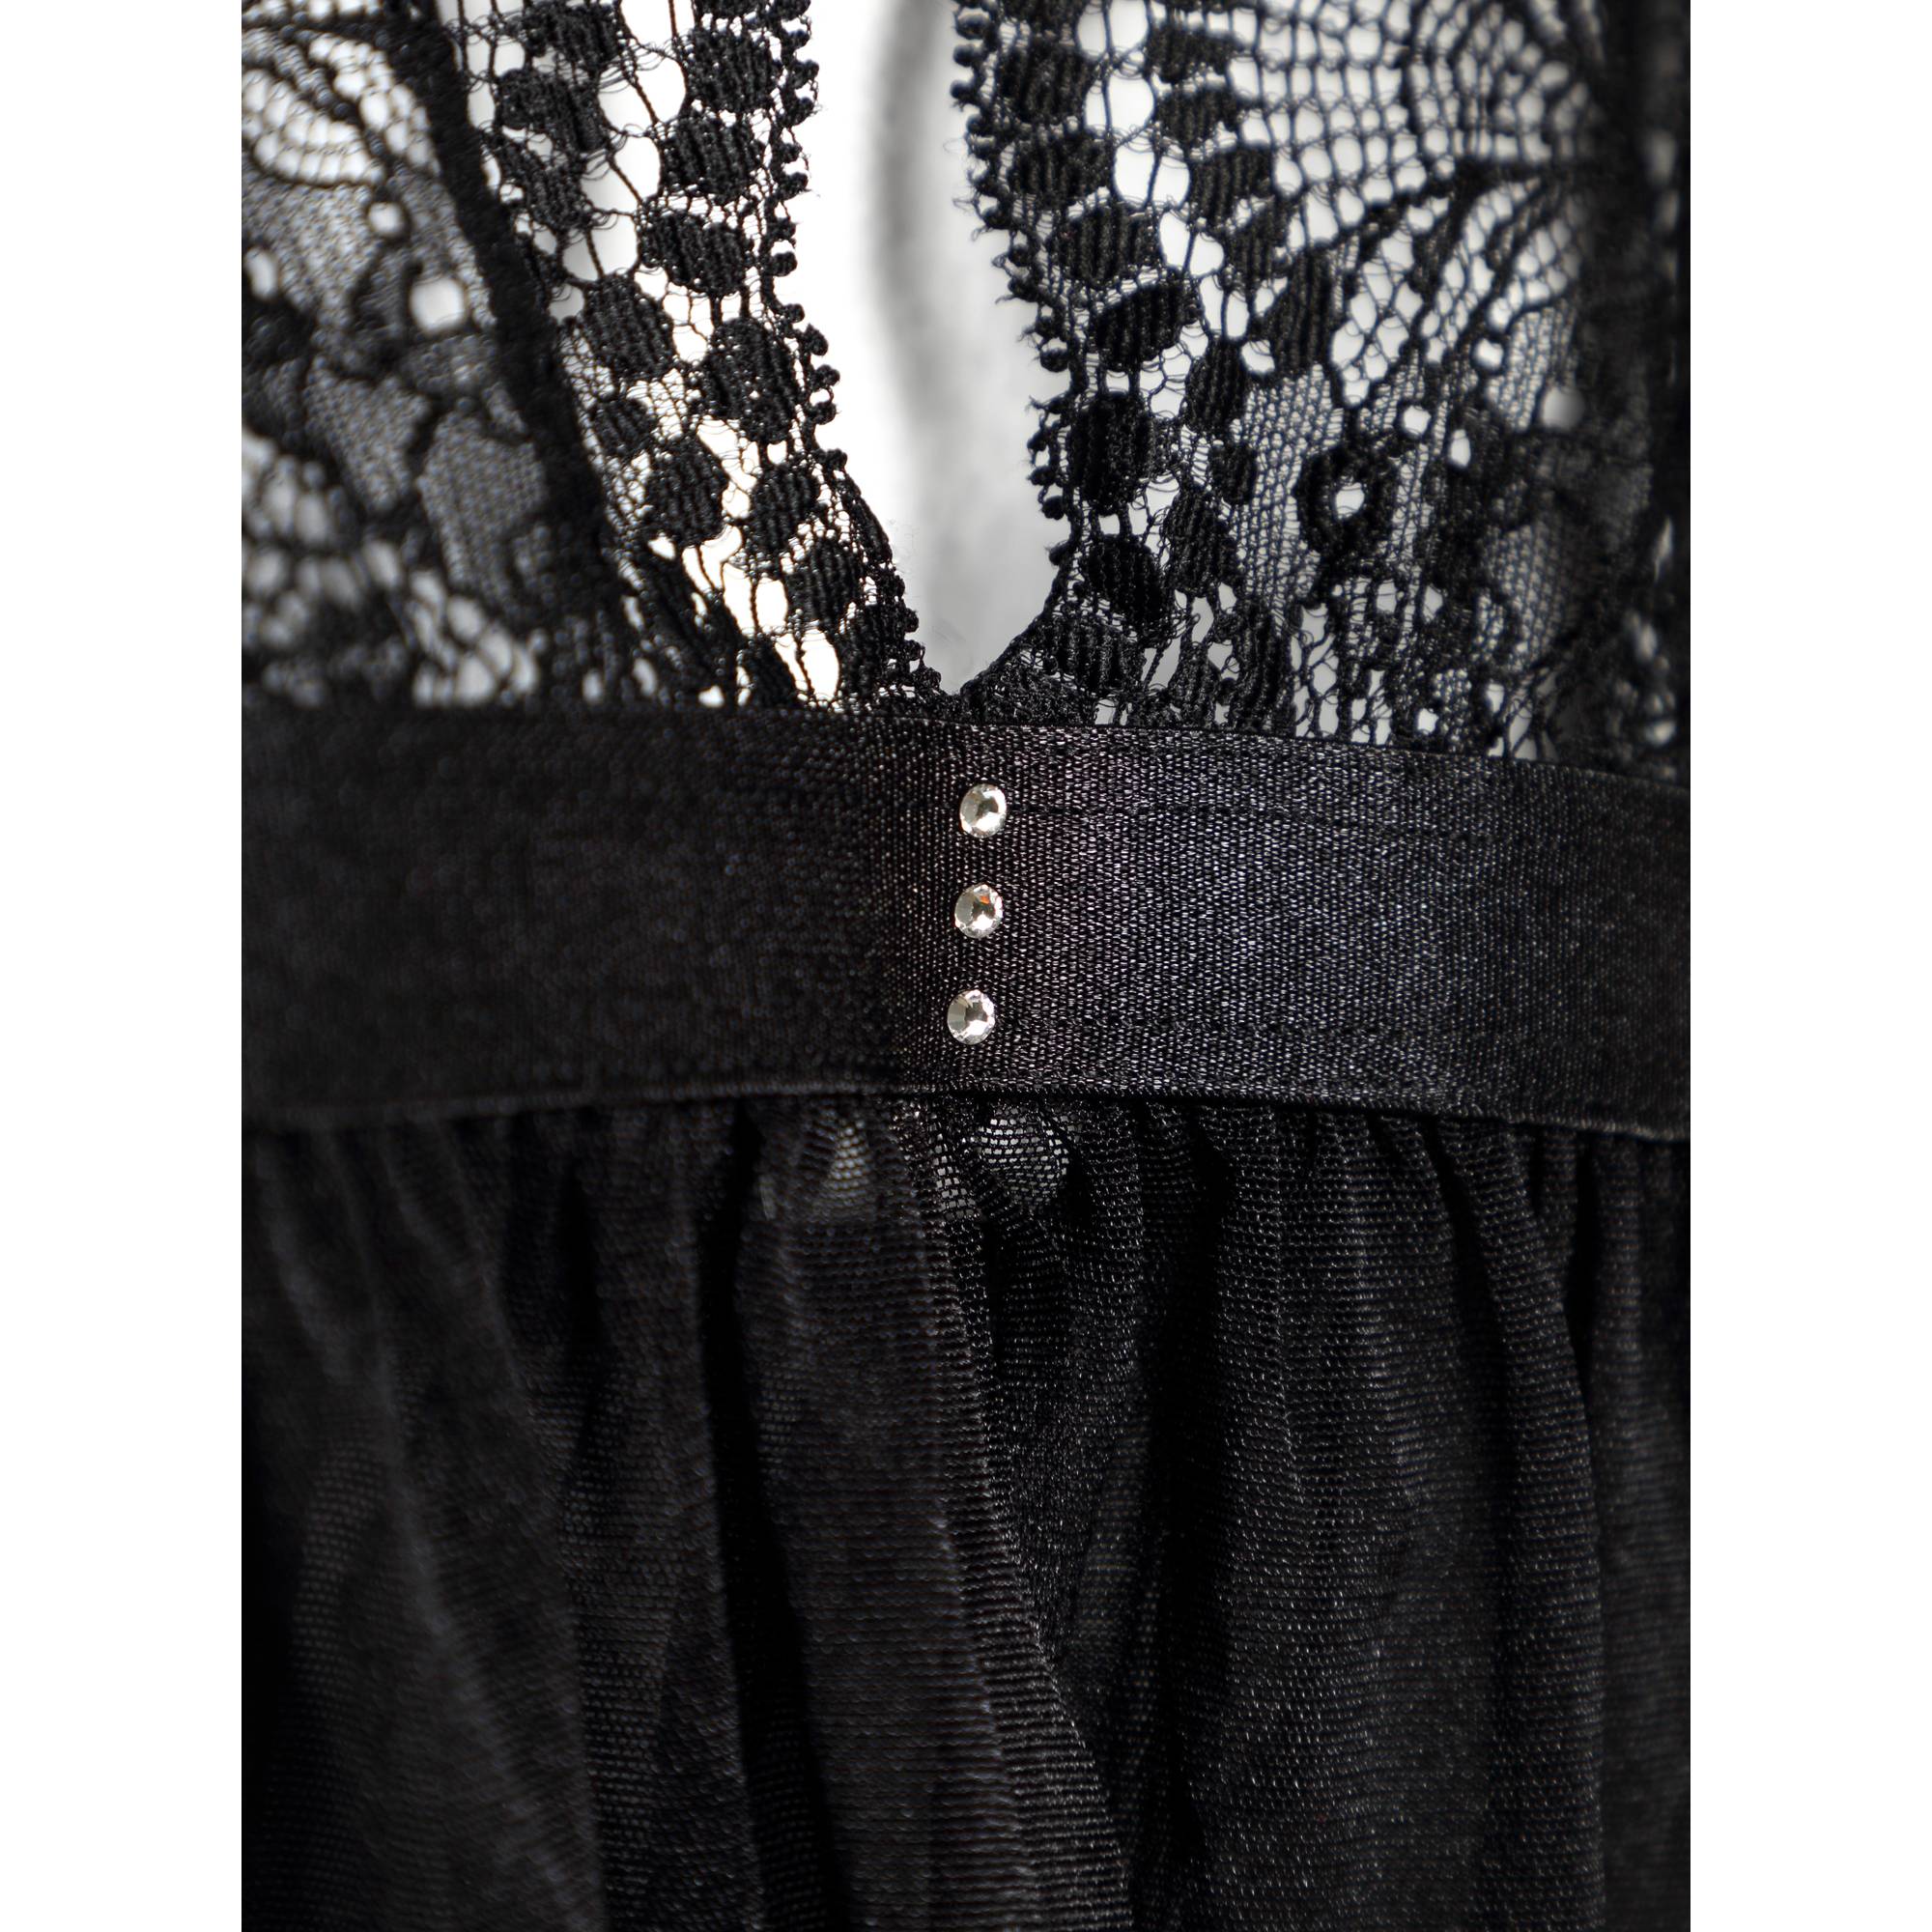 Сорочка ночная женская CONTE ELEGANT SWAROWSKI LHW 1088 royal black